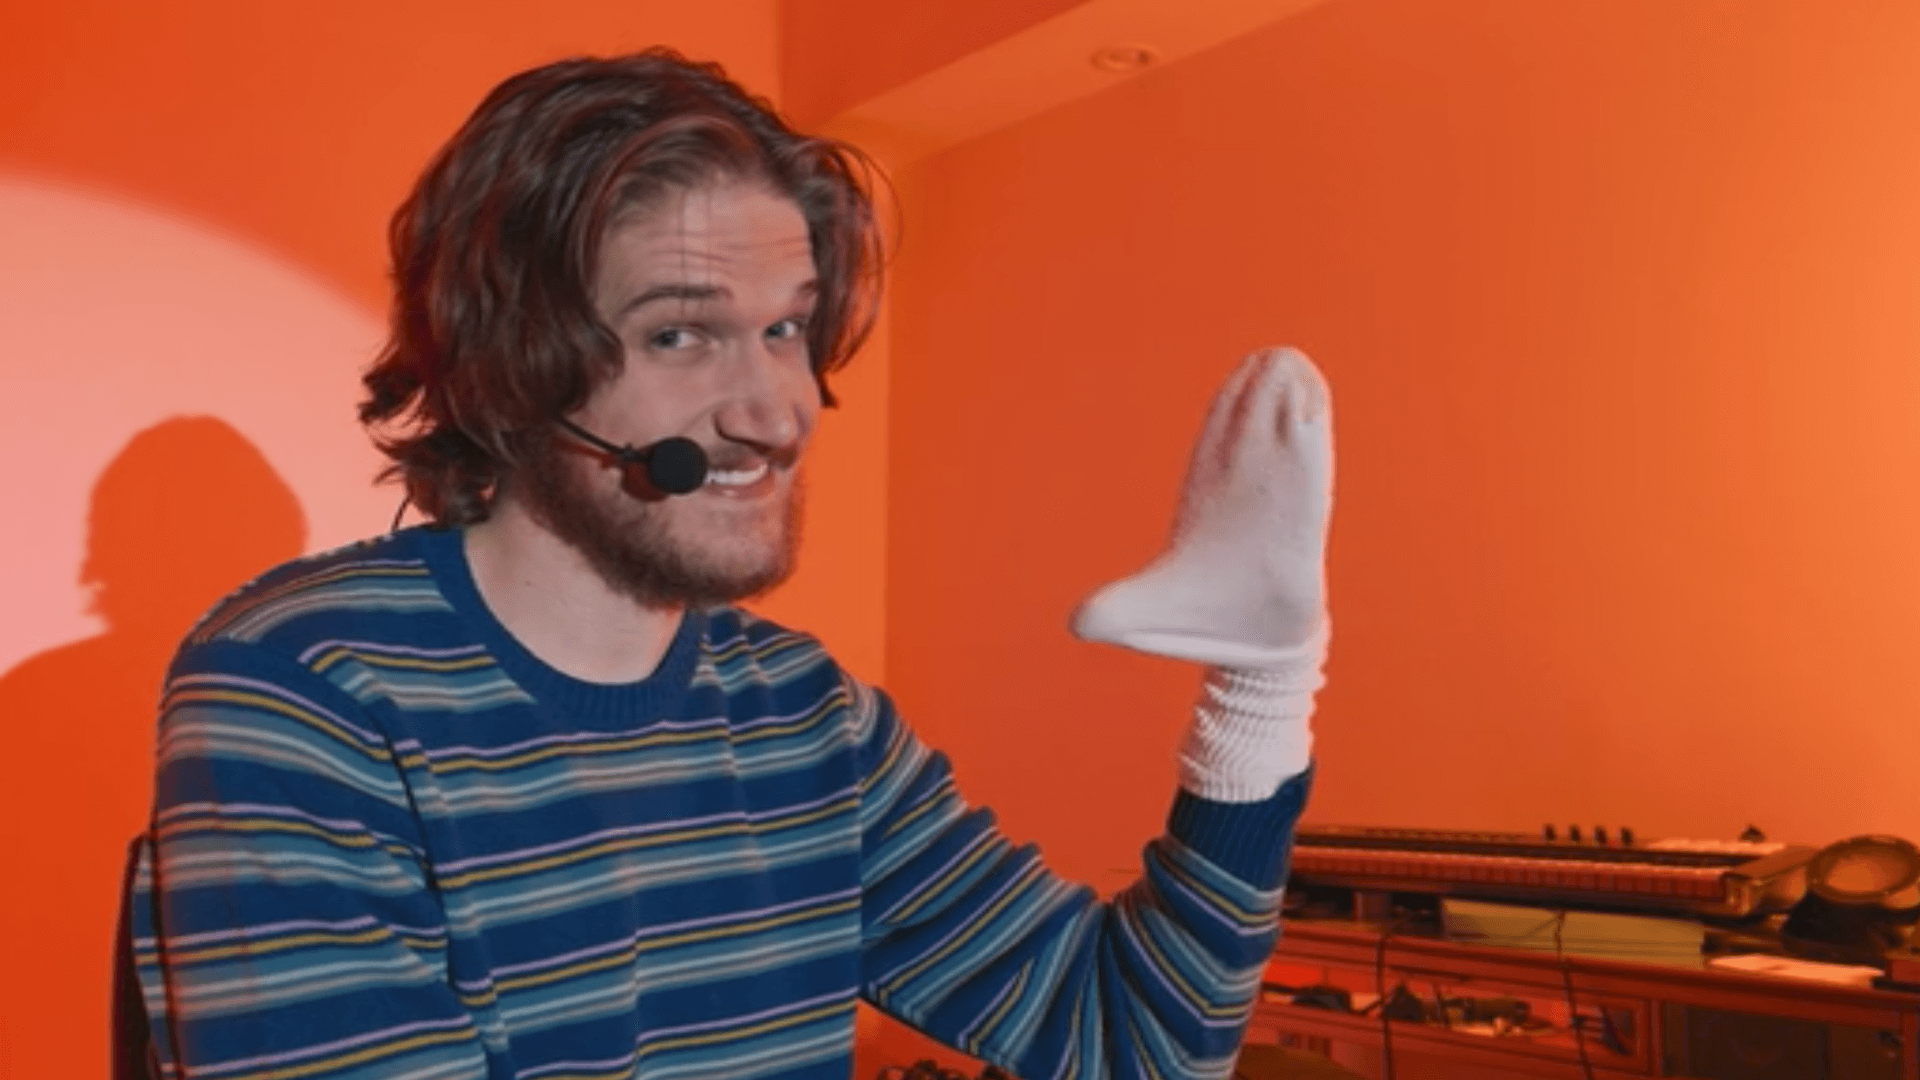 Bo Burnham Sock puppet in blue jumper and smile Inside on Netflix orange background